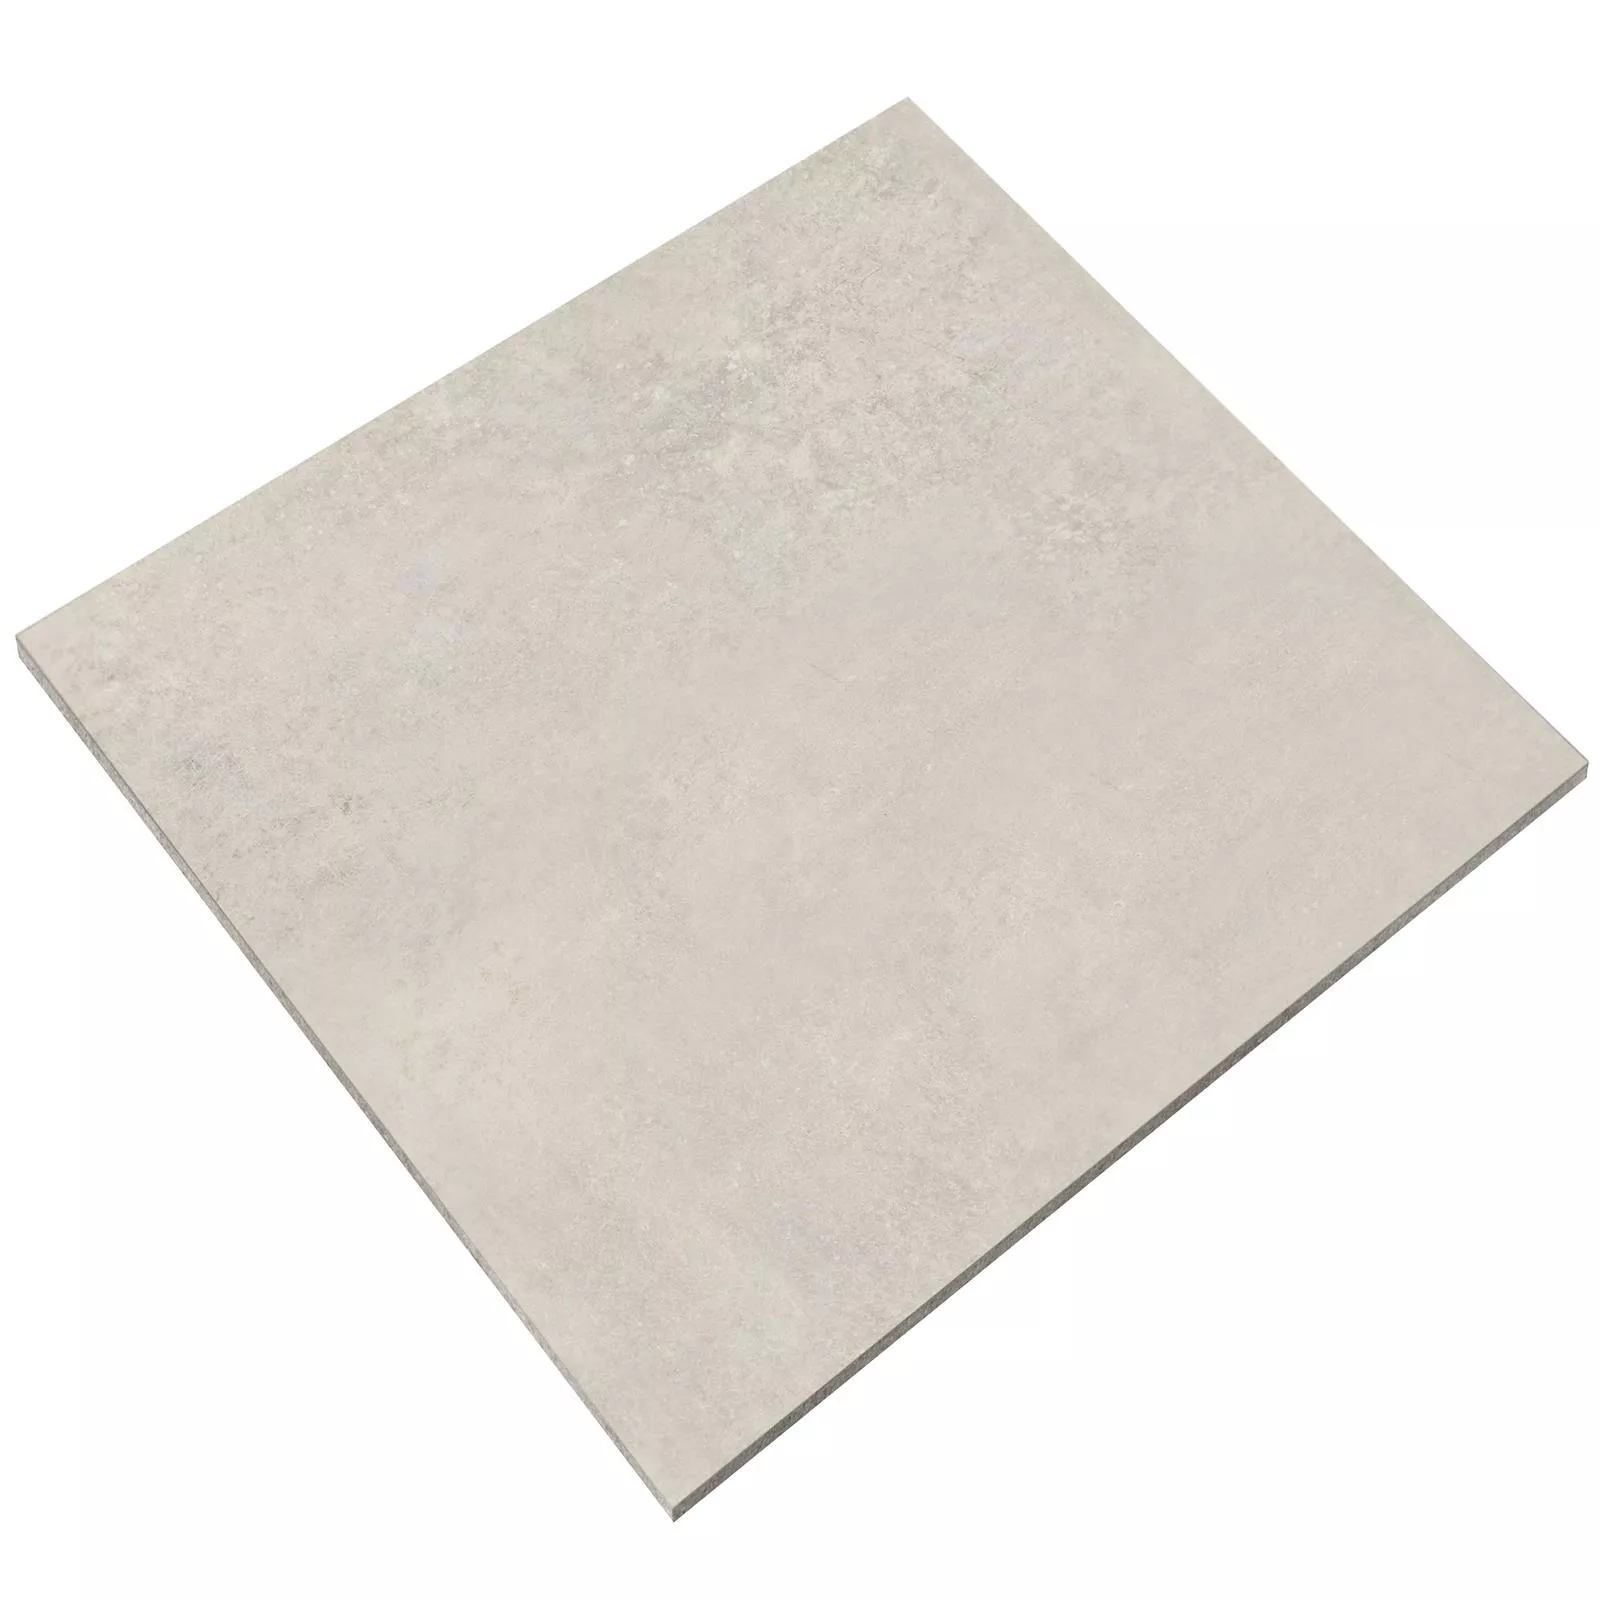 Sample Floor Tiles Peaceway Ivory 60x60cm